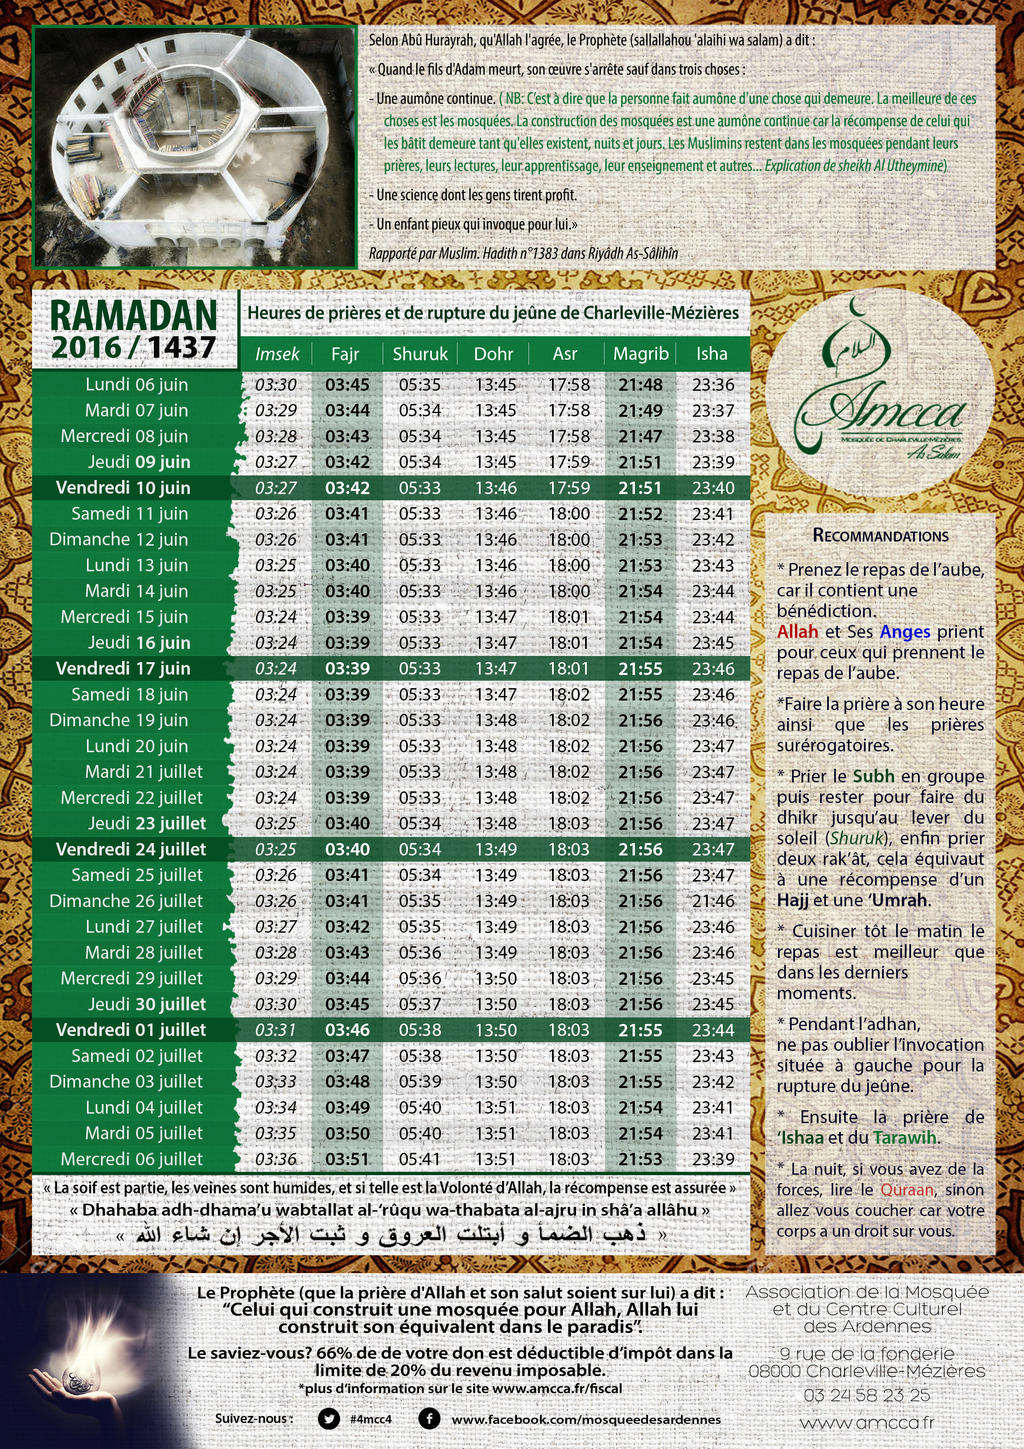 Calendrier ramadan 2016 1437 by mimid58 on DeviantArt